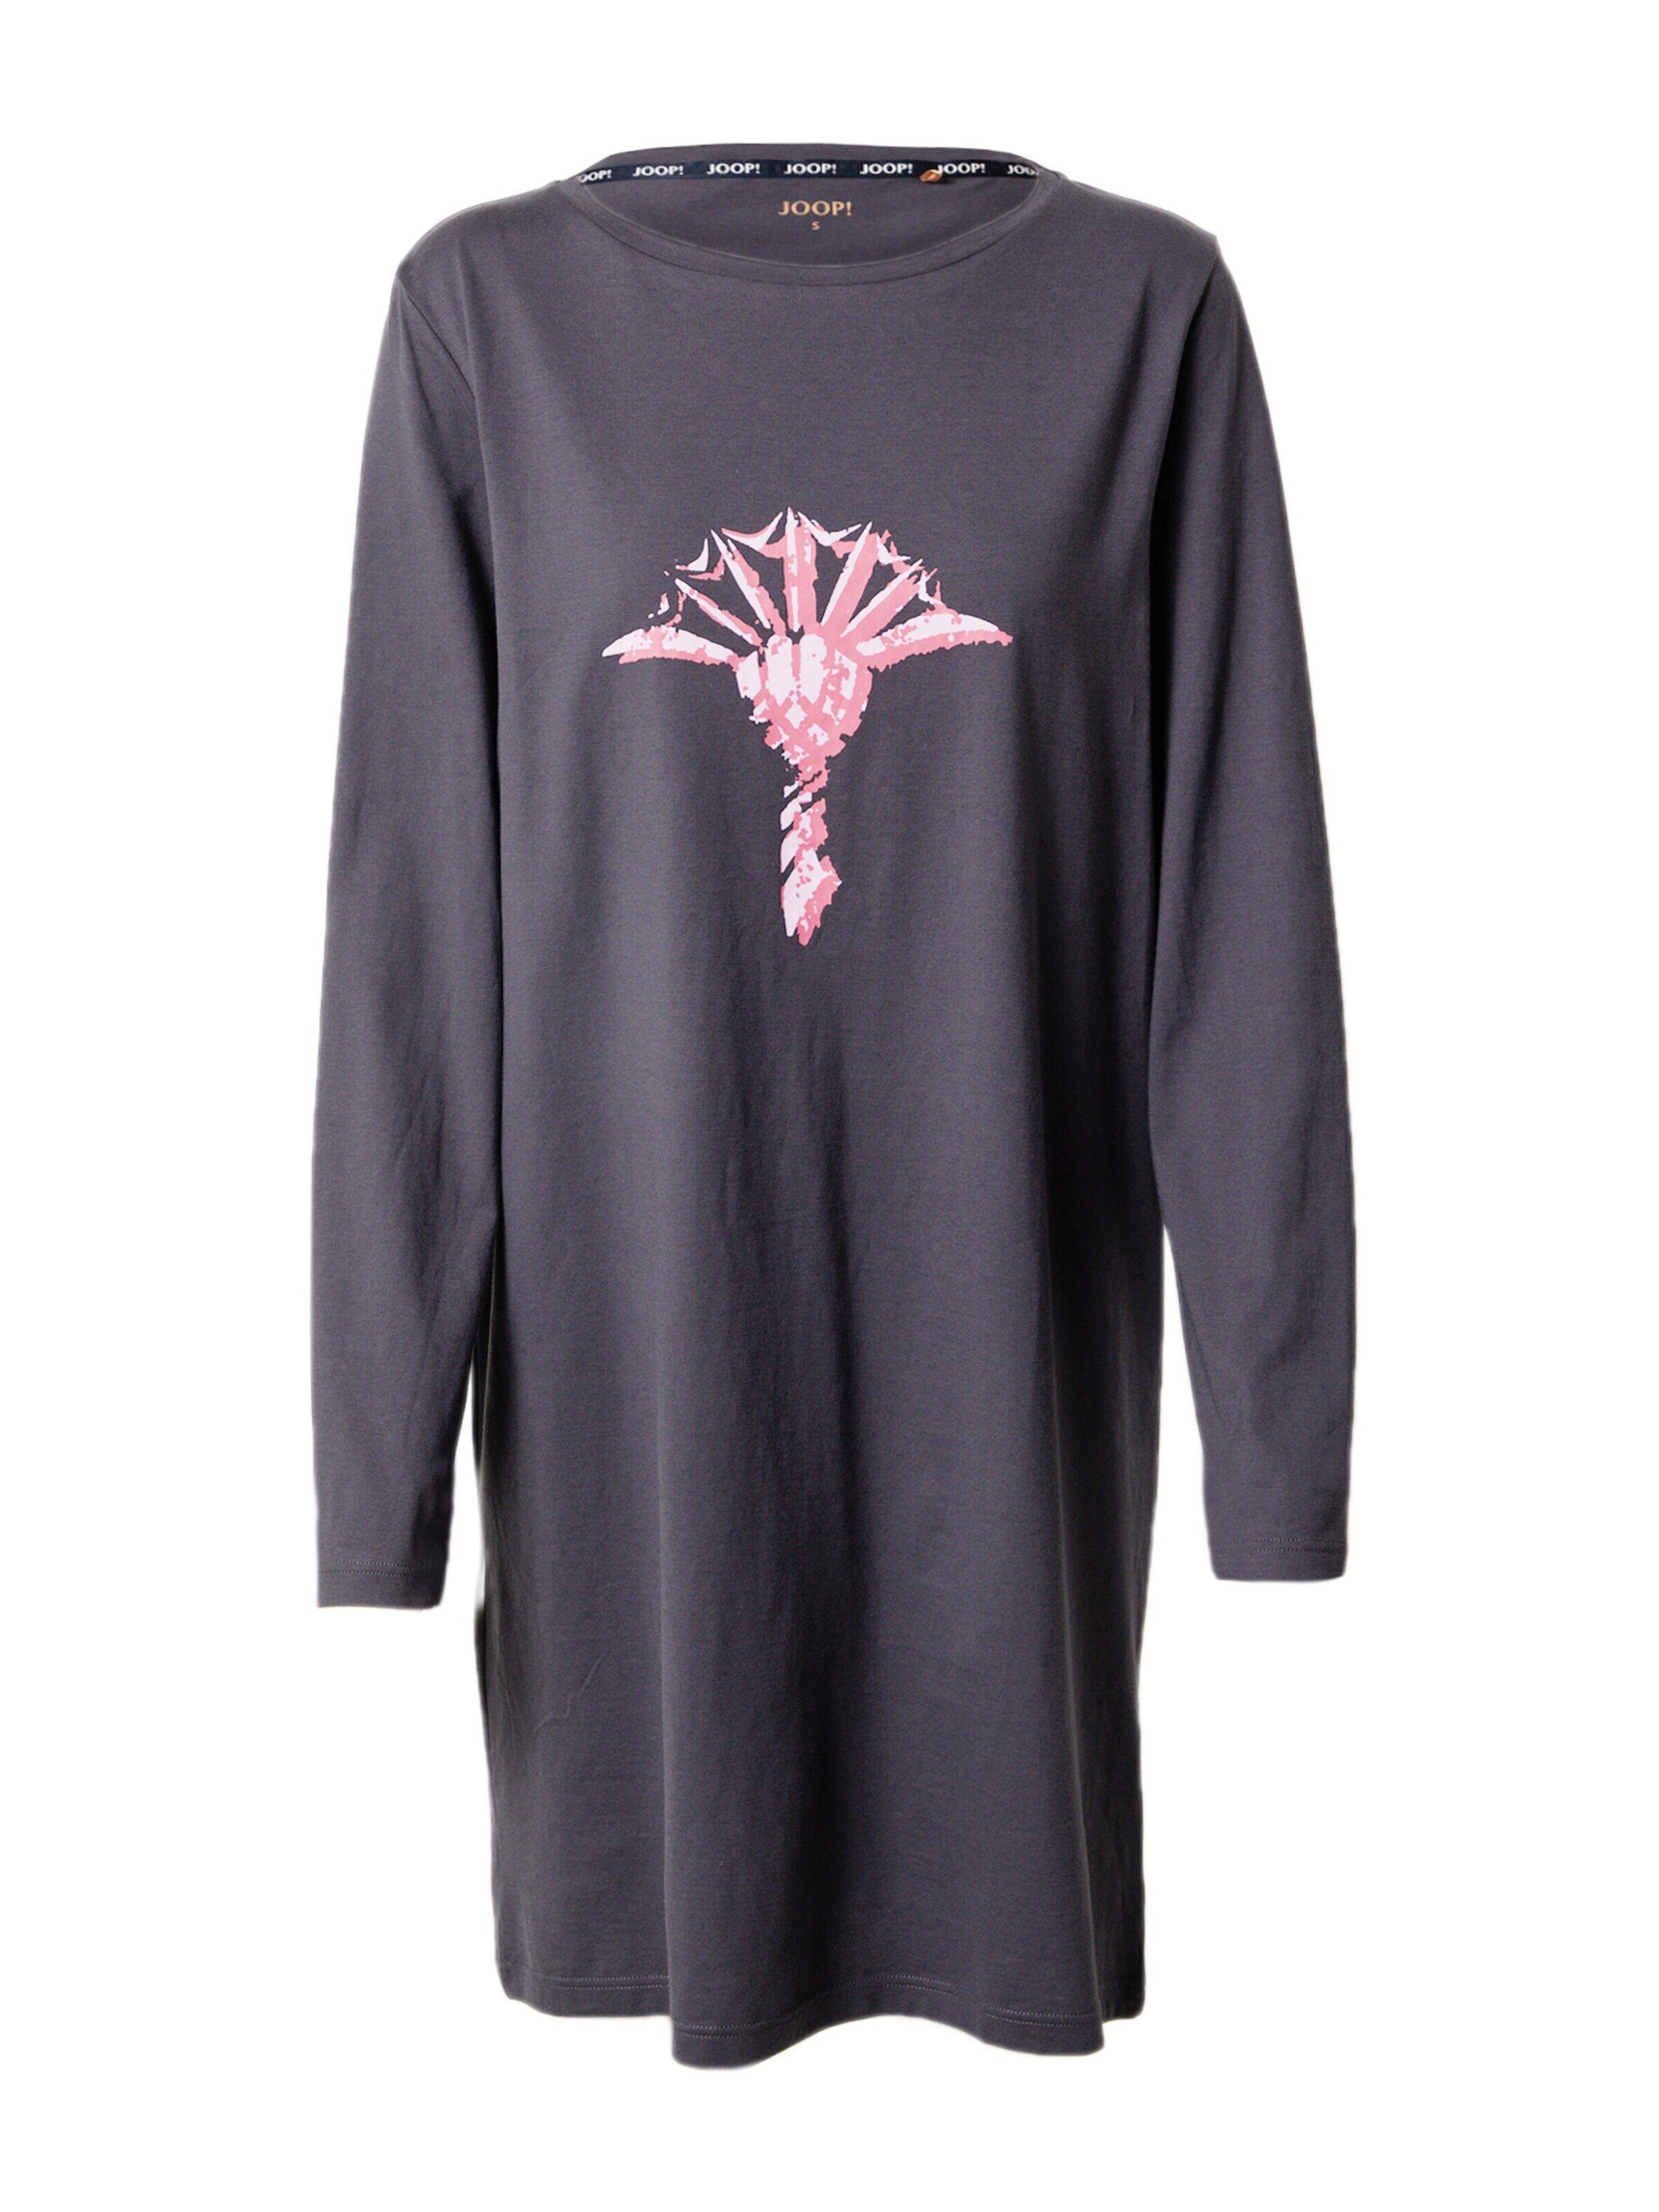 Kimono, Joop! Grau/Rosa Plain/ohne 100% Details Baumwolle, Material: